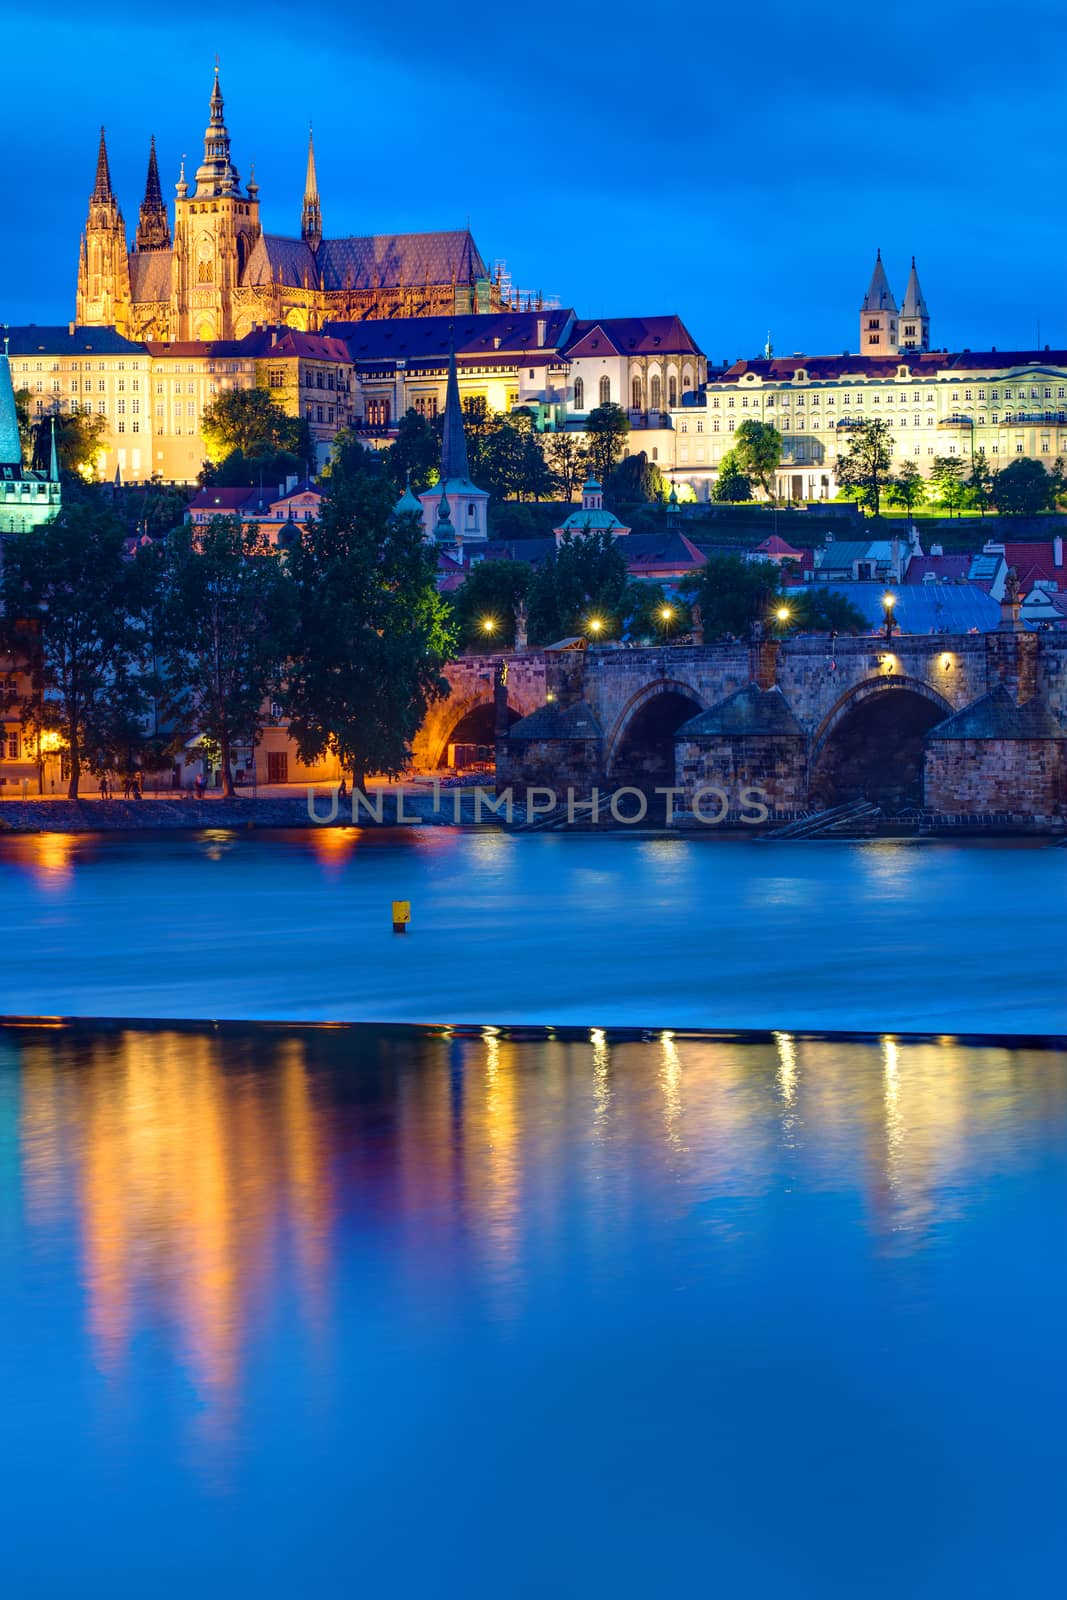 The castle and river Vltava in Prague, Czech Republic